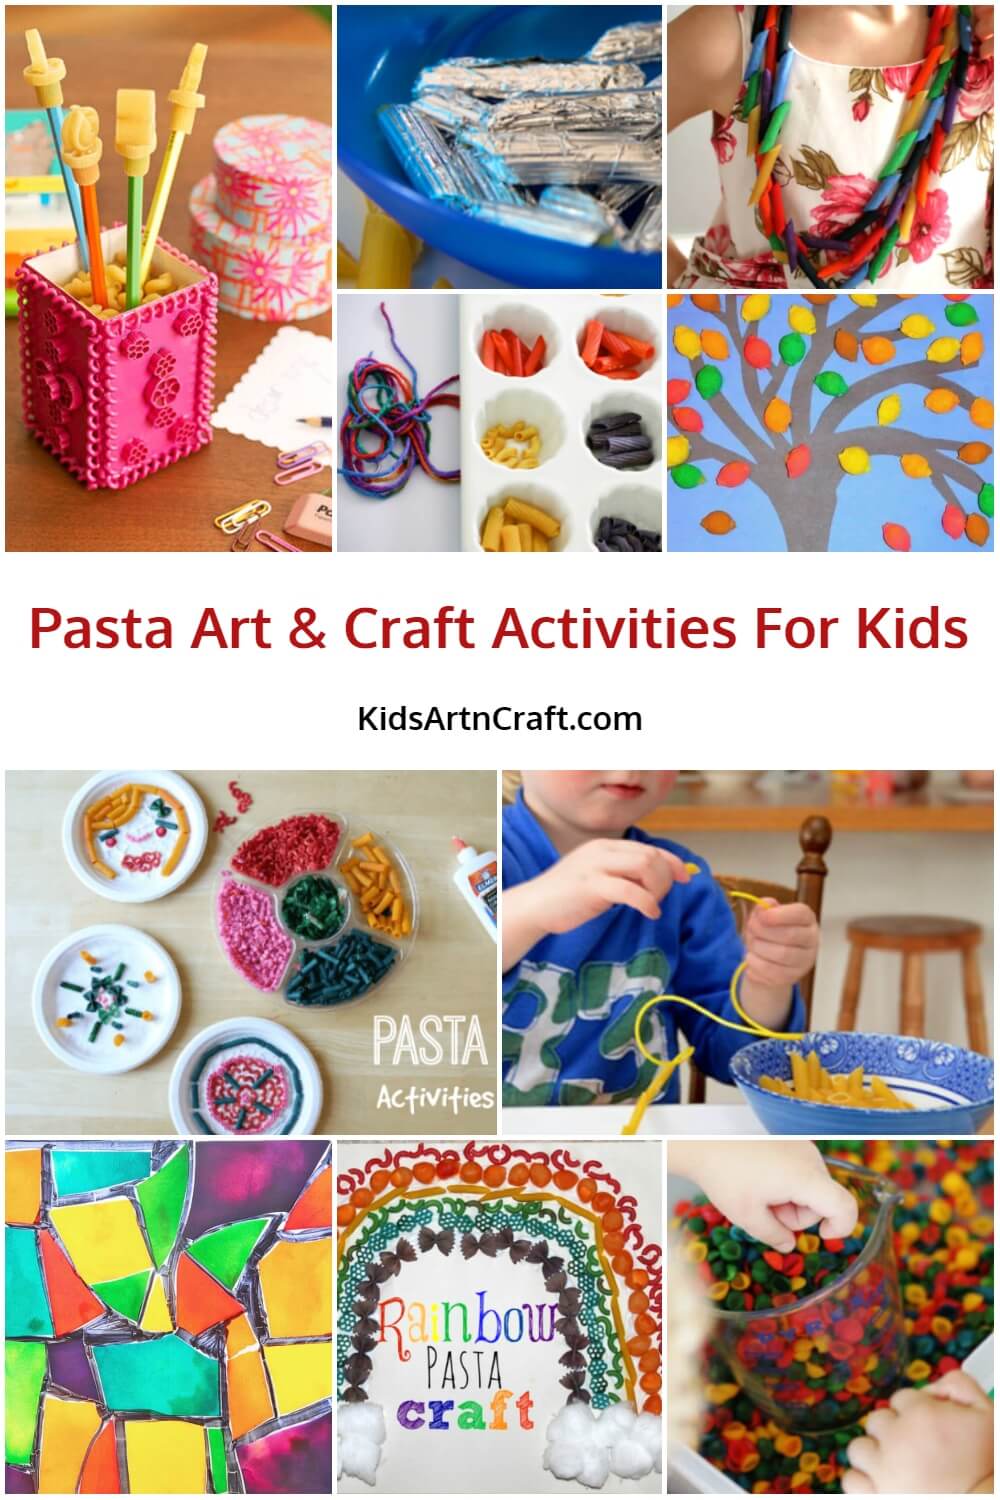 Pasta Art & Craft Activities For Kids - Kids Art & Craft